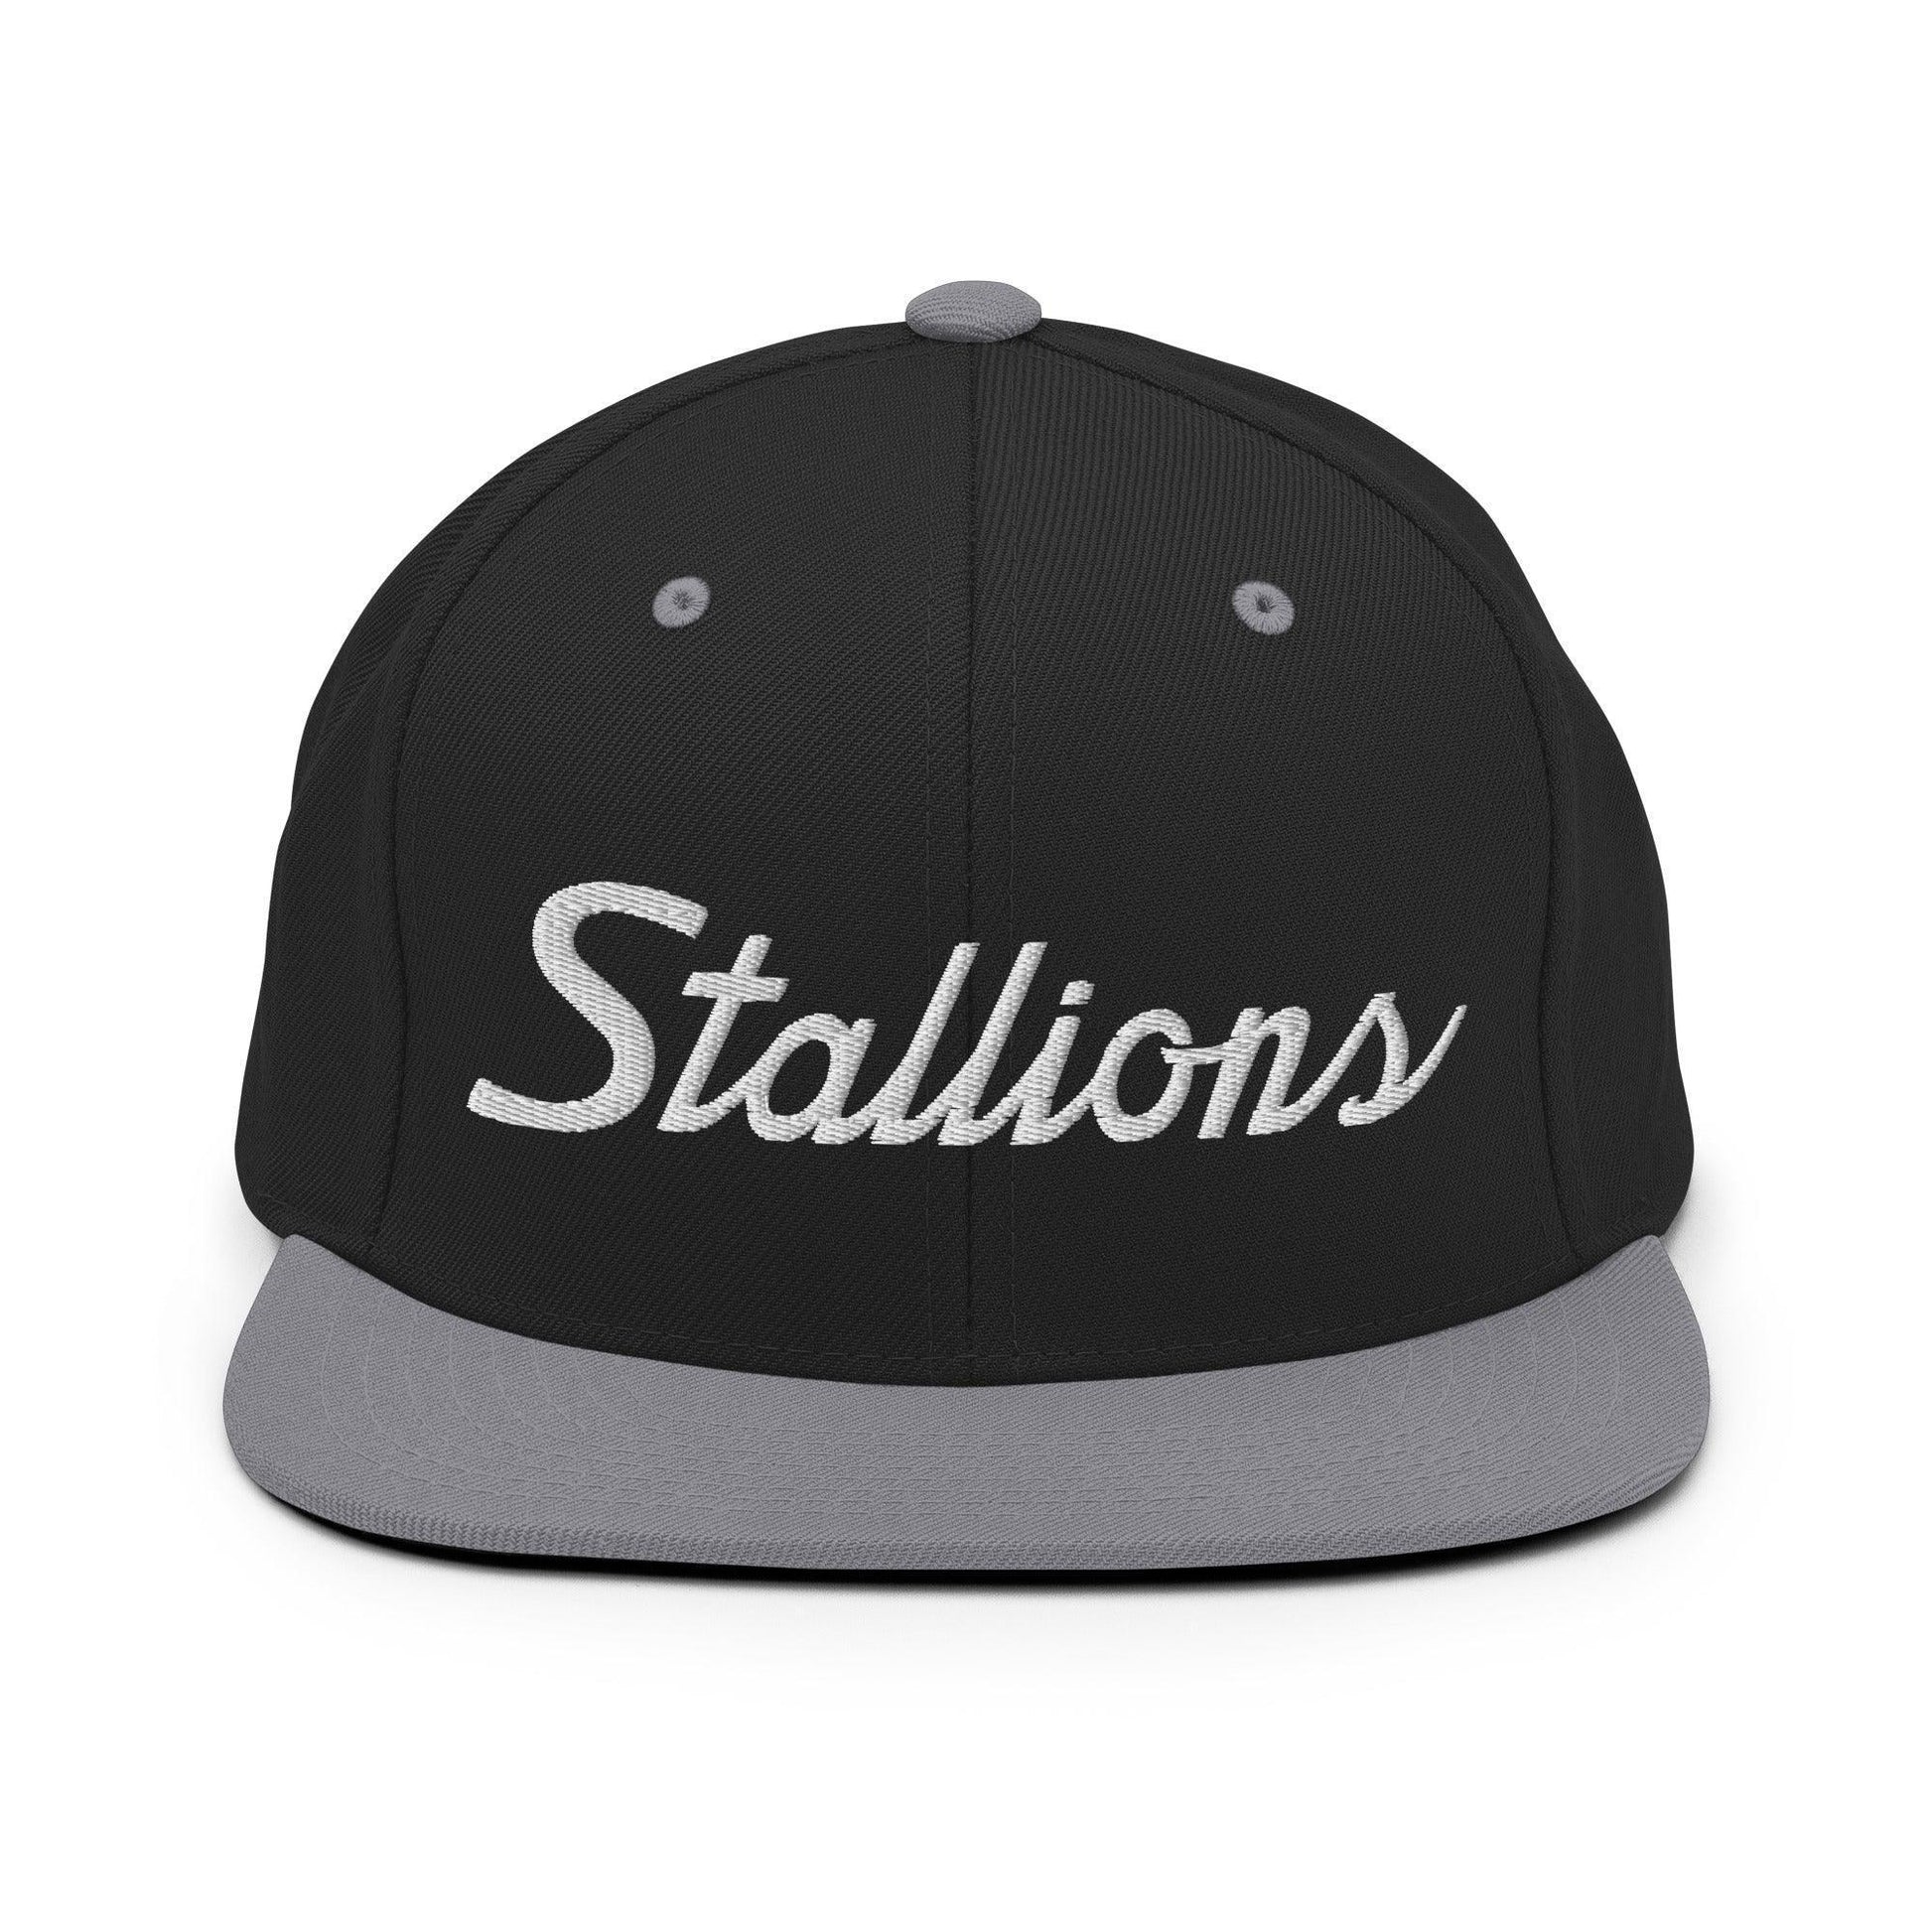 Stallions School Mascot Script Snapback Hat Black/ Silver